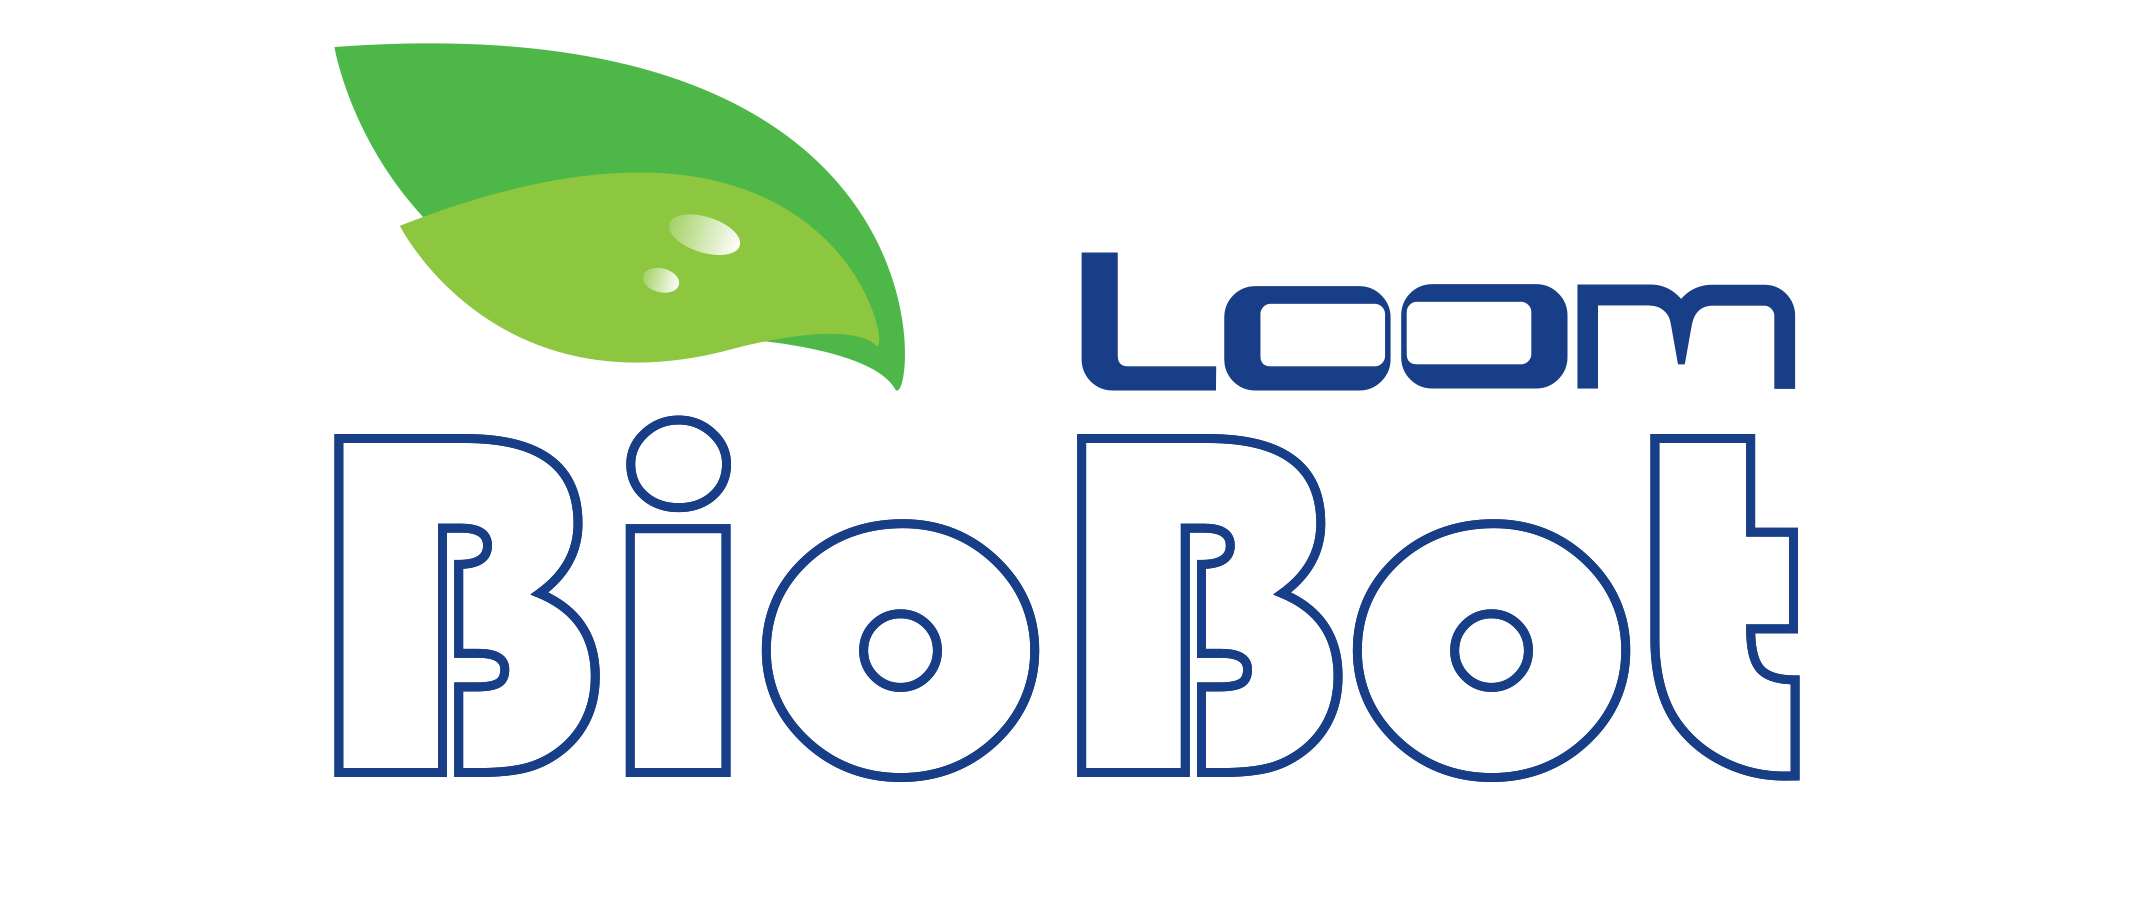 biobot